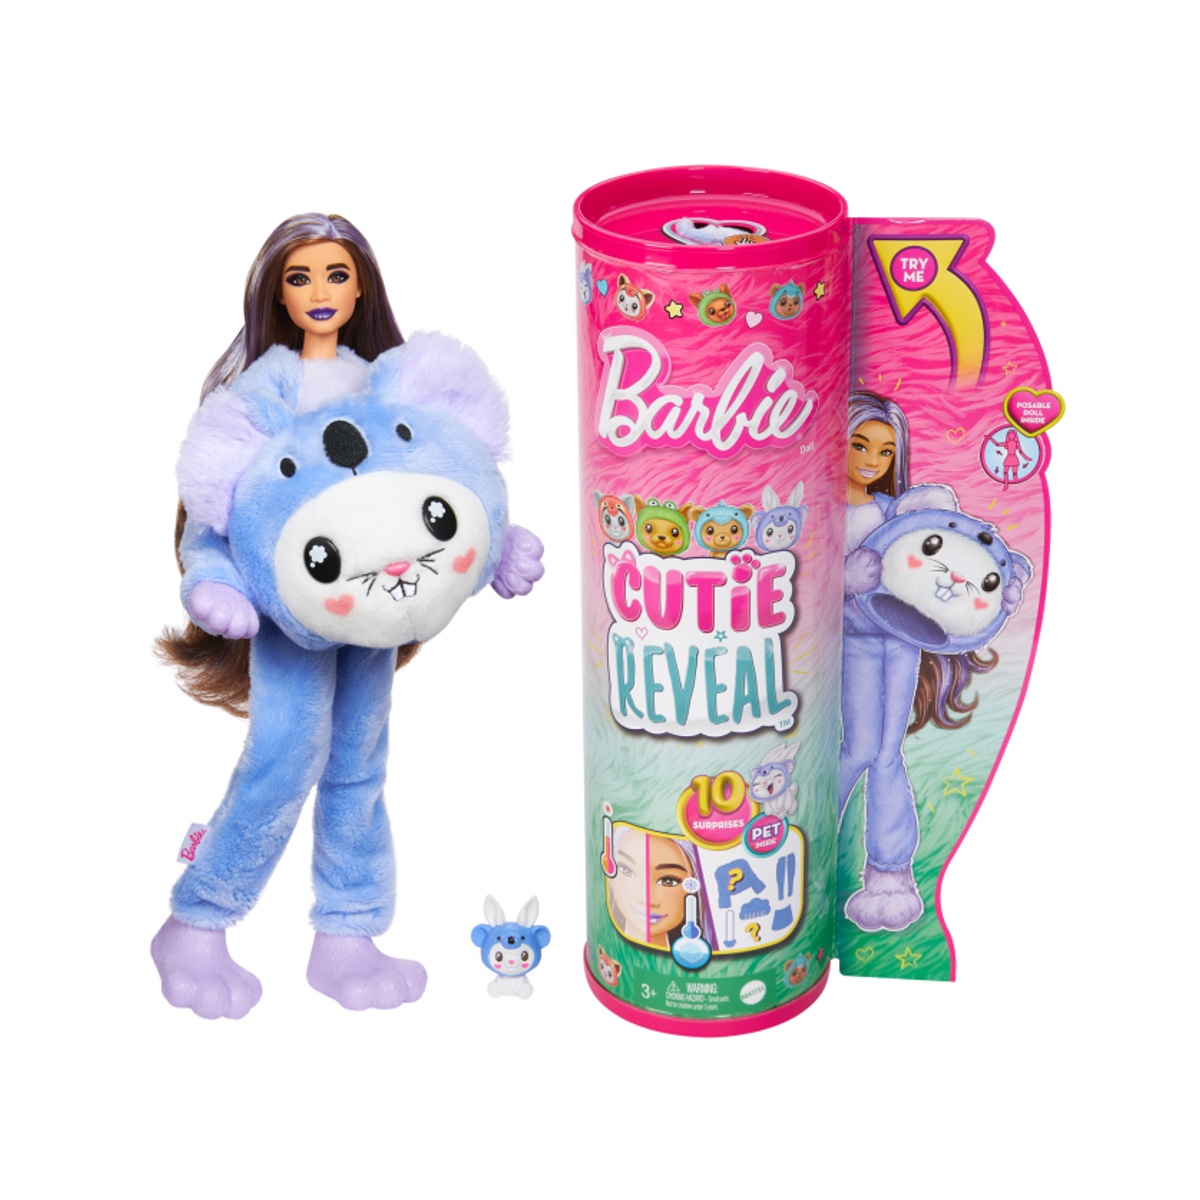 Barbie Cutie Reveal Costume Cuties Series - Bunny In Koala